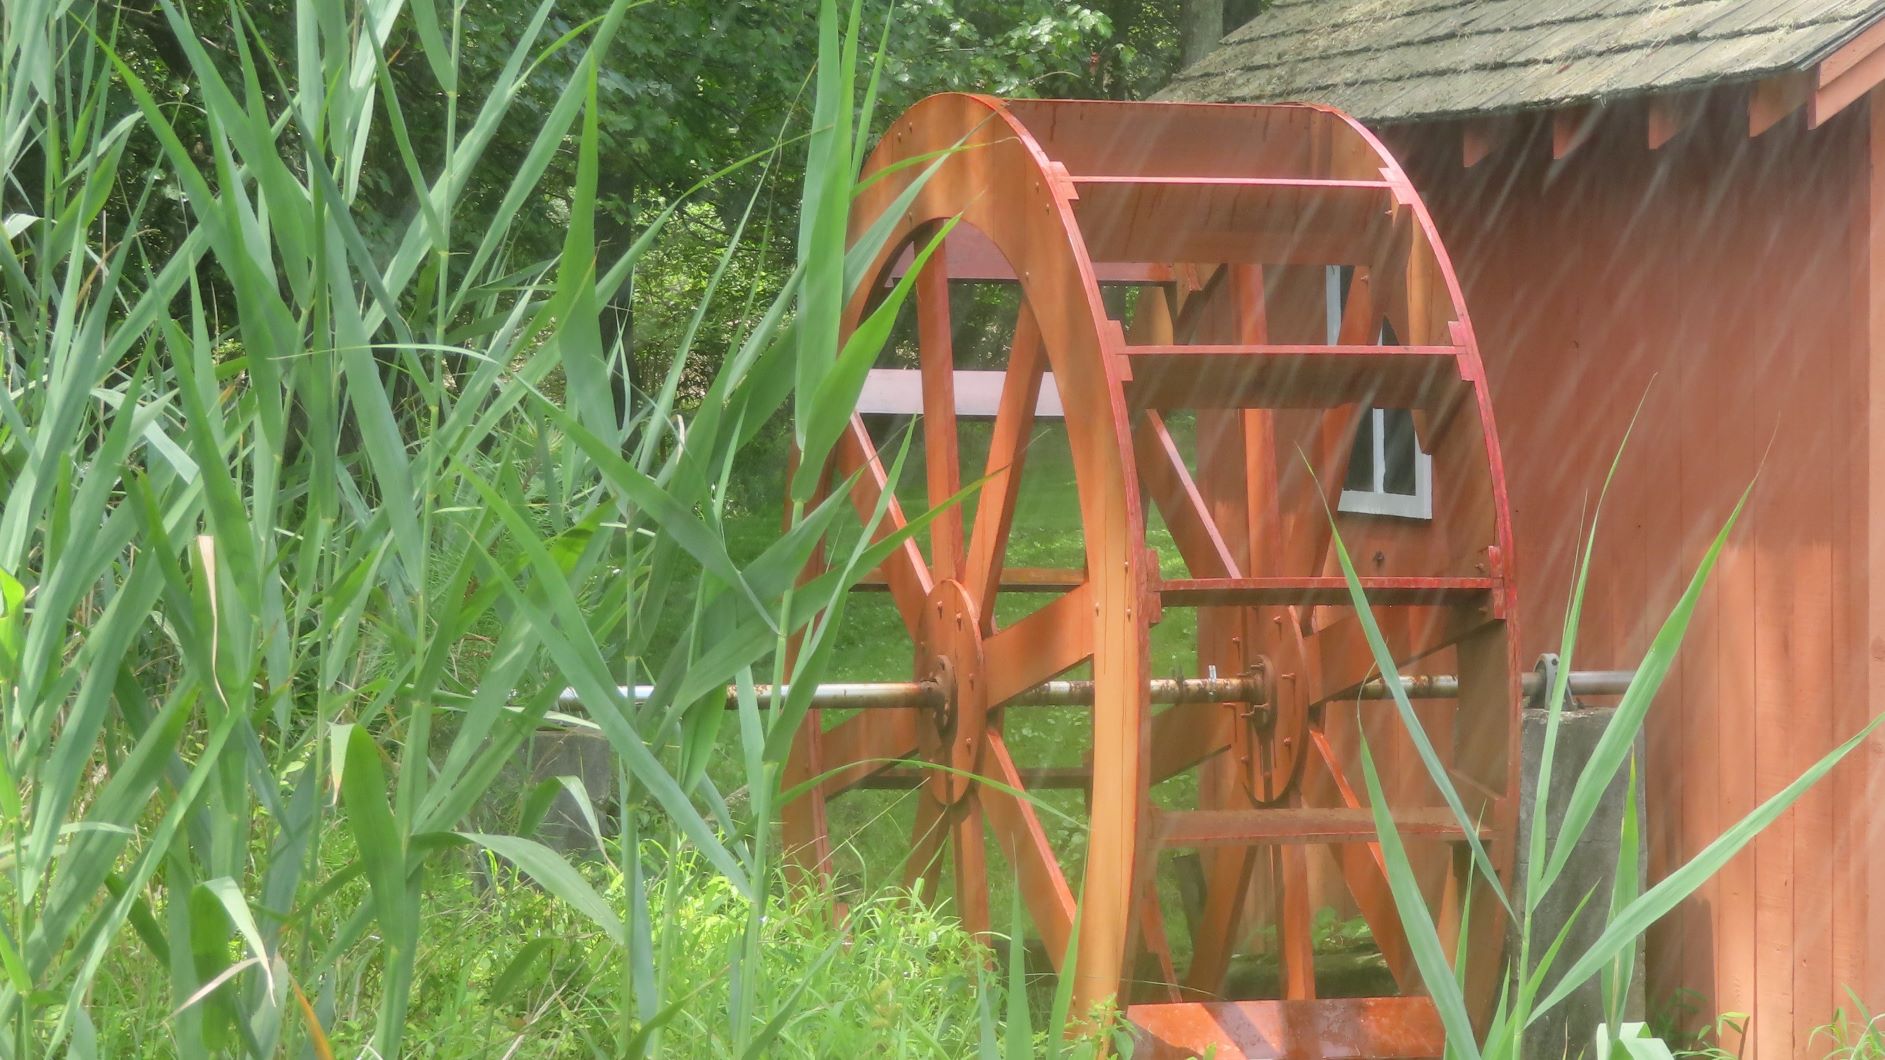 Photograph of mill wheel through reeds